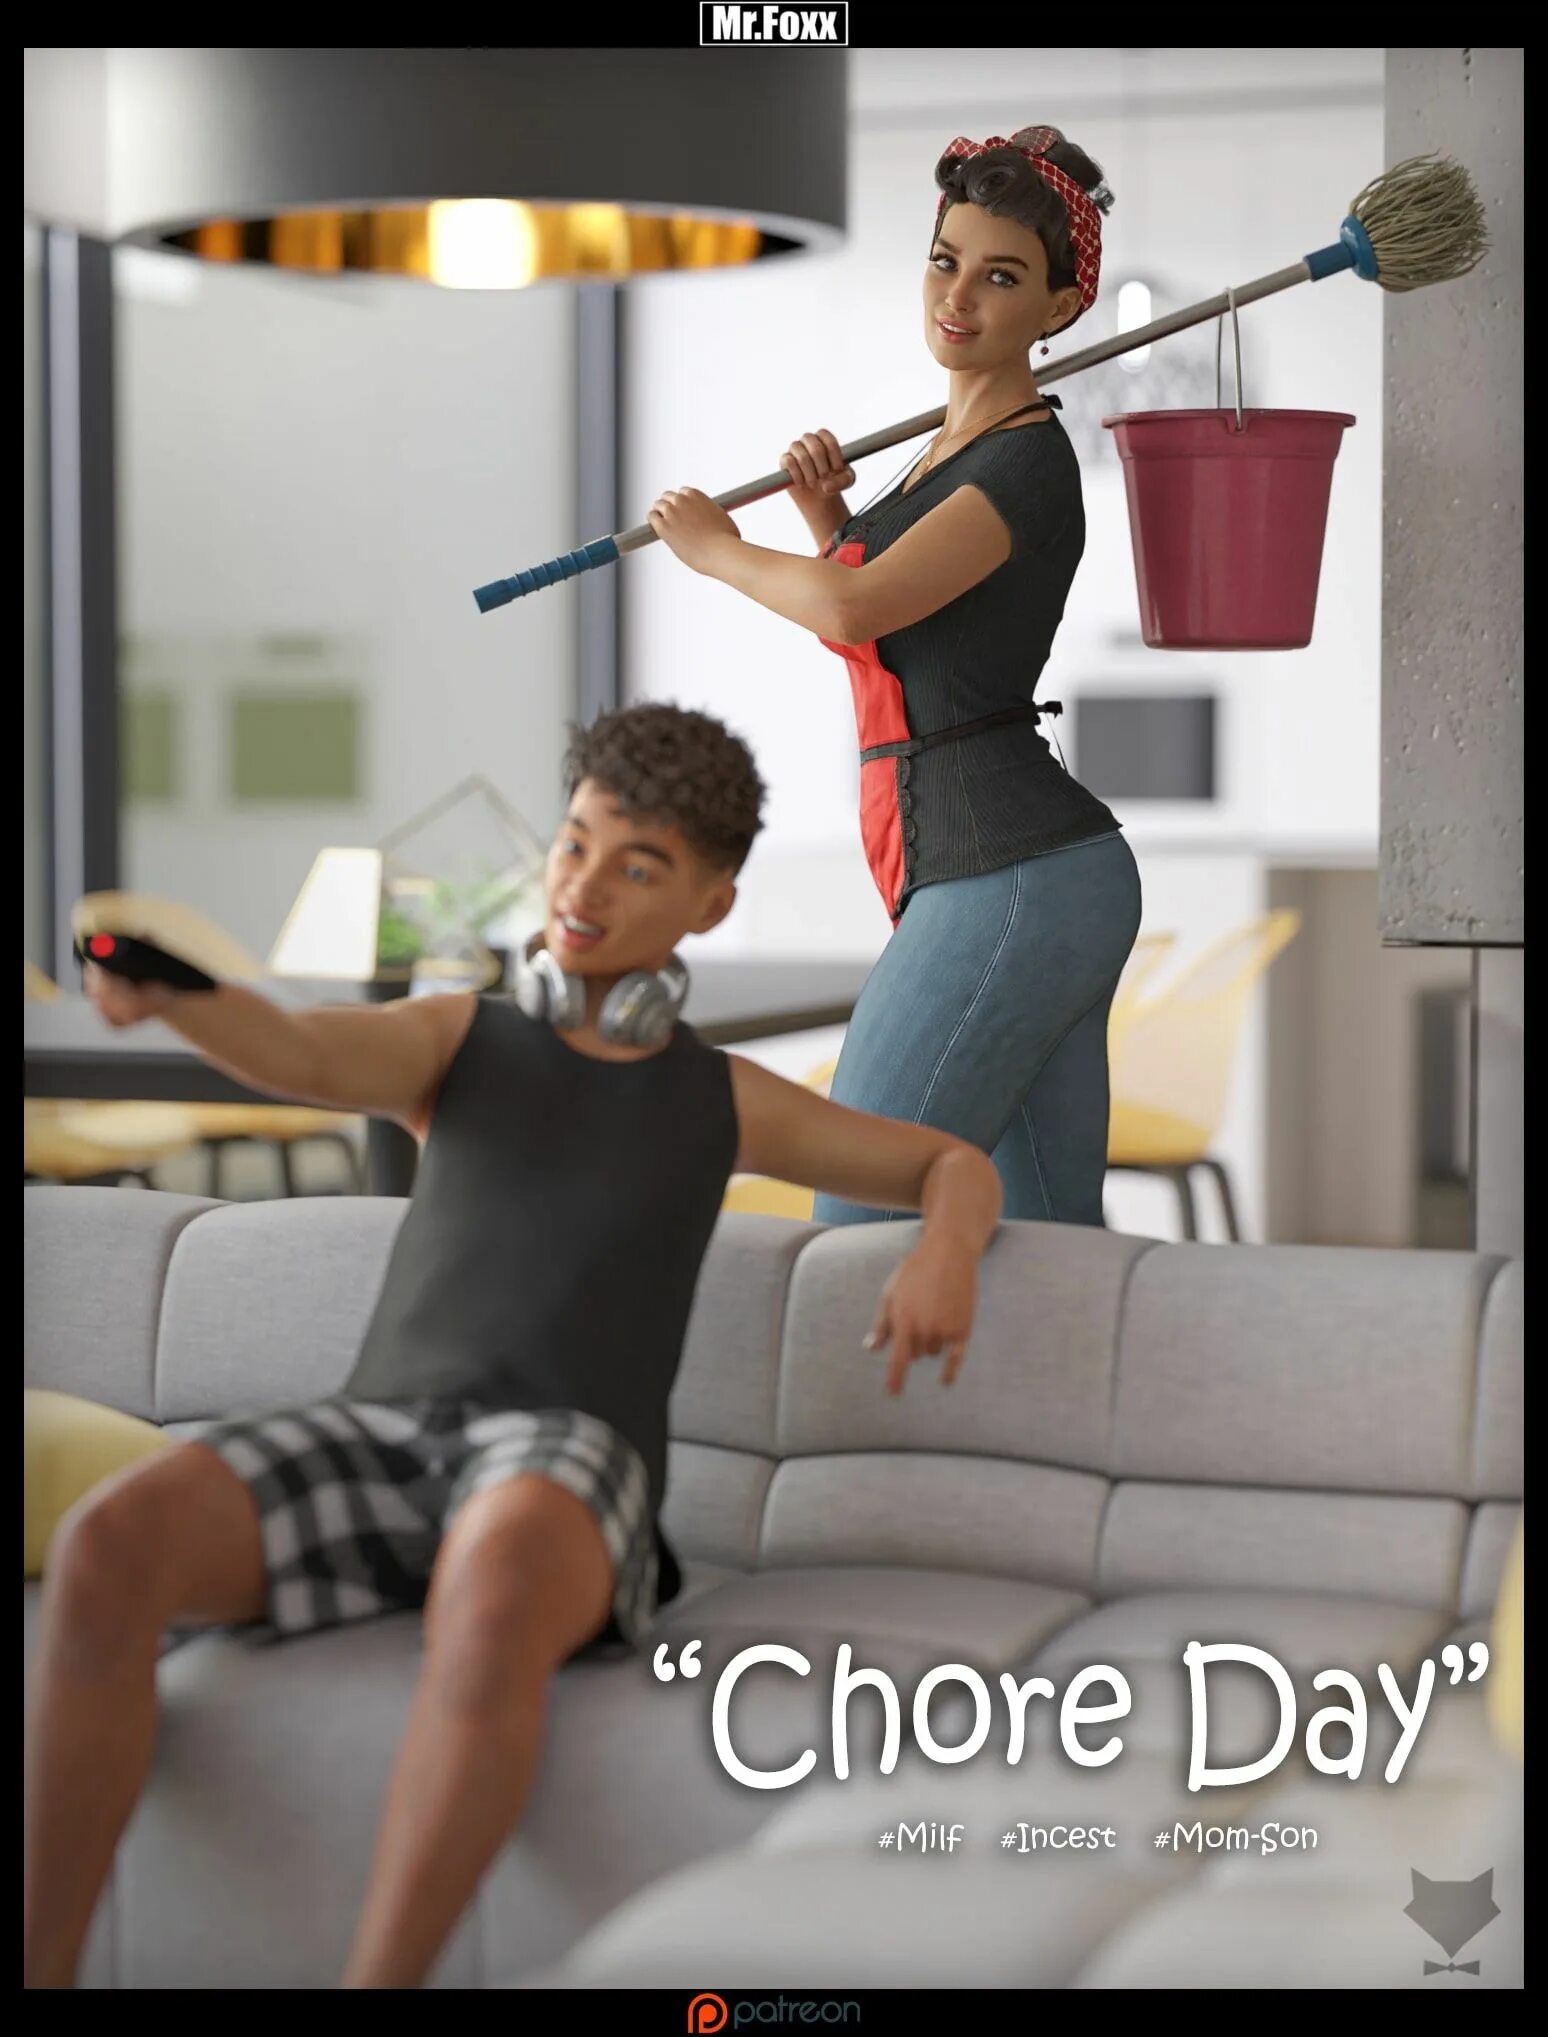 Mr day 3. Chore Day 3d. Chore Day [Mr.Foxx]. [Mr.Foxx] Chore Day 3d.